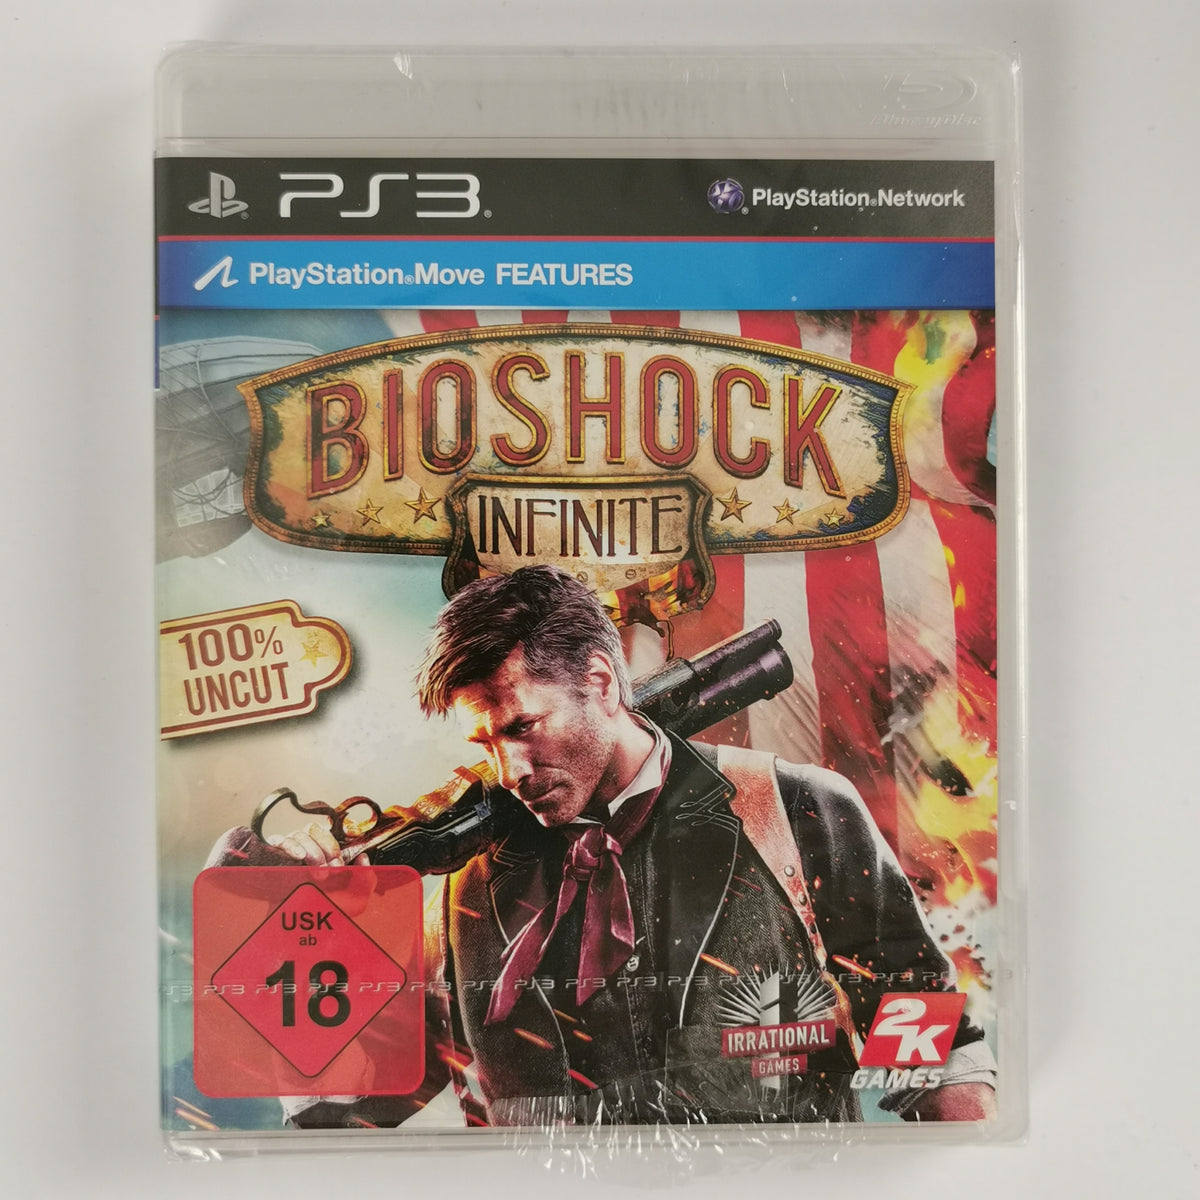 Bioshock Infinite Playstation 3 [PS3]